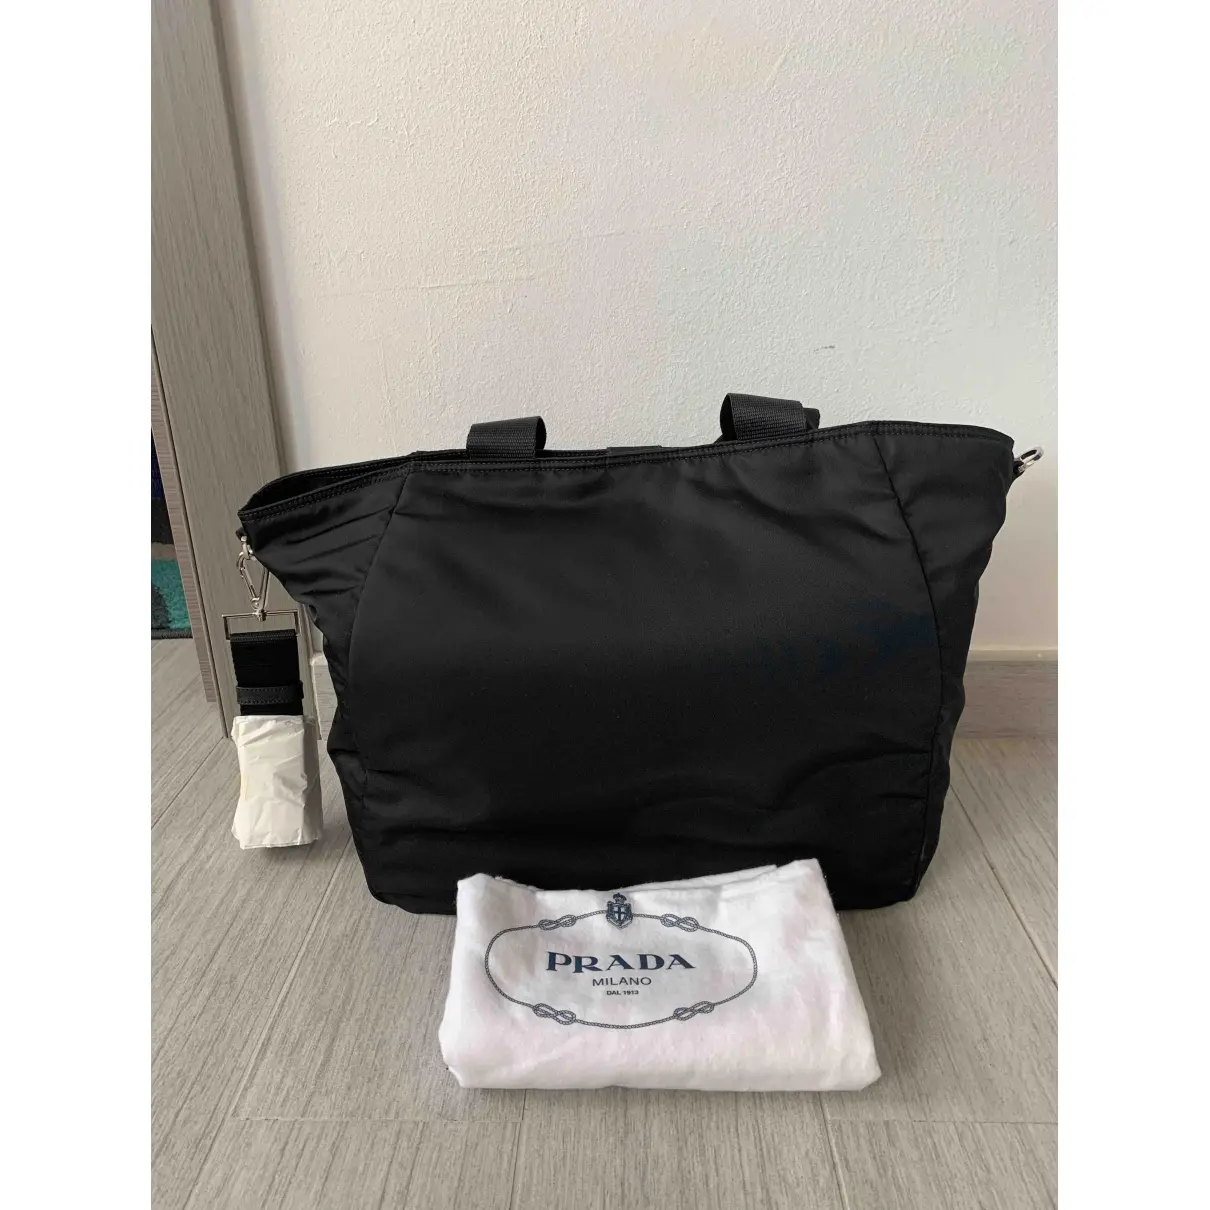 Buy Prada Re-Nylon cloth 48h bag online